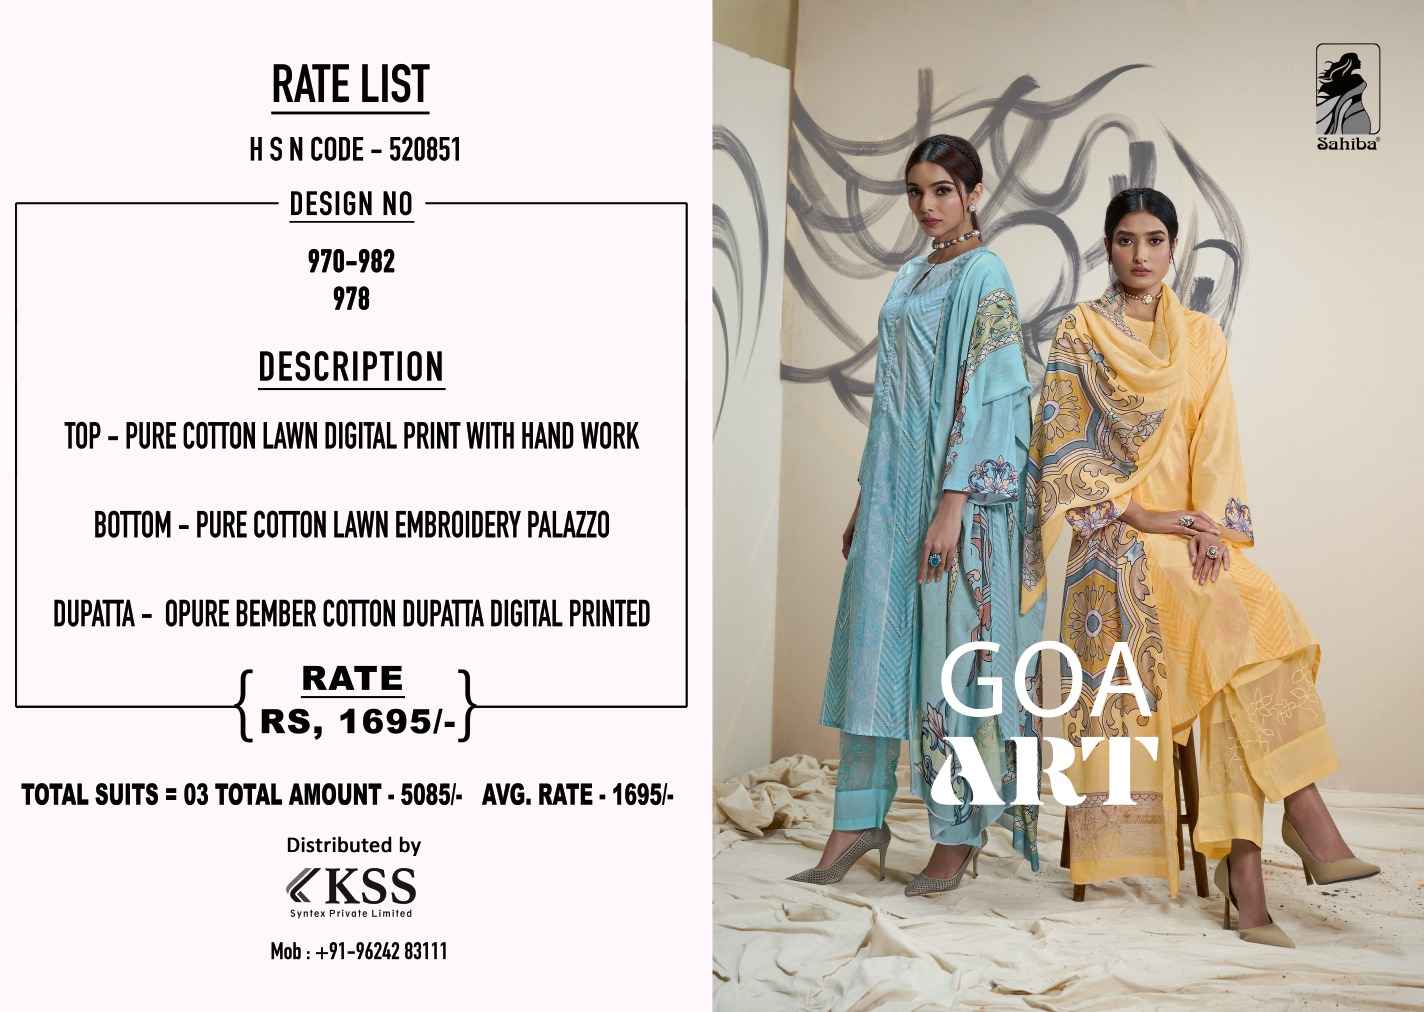 Sahiba Goa Art Pure Cotton Lawn Print Dress Material (3 Pc Catalog)